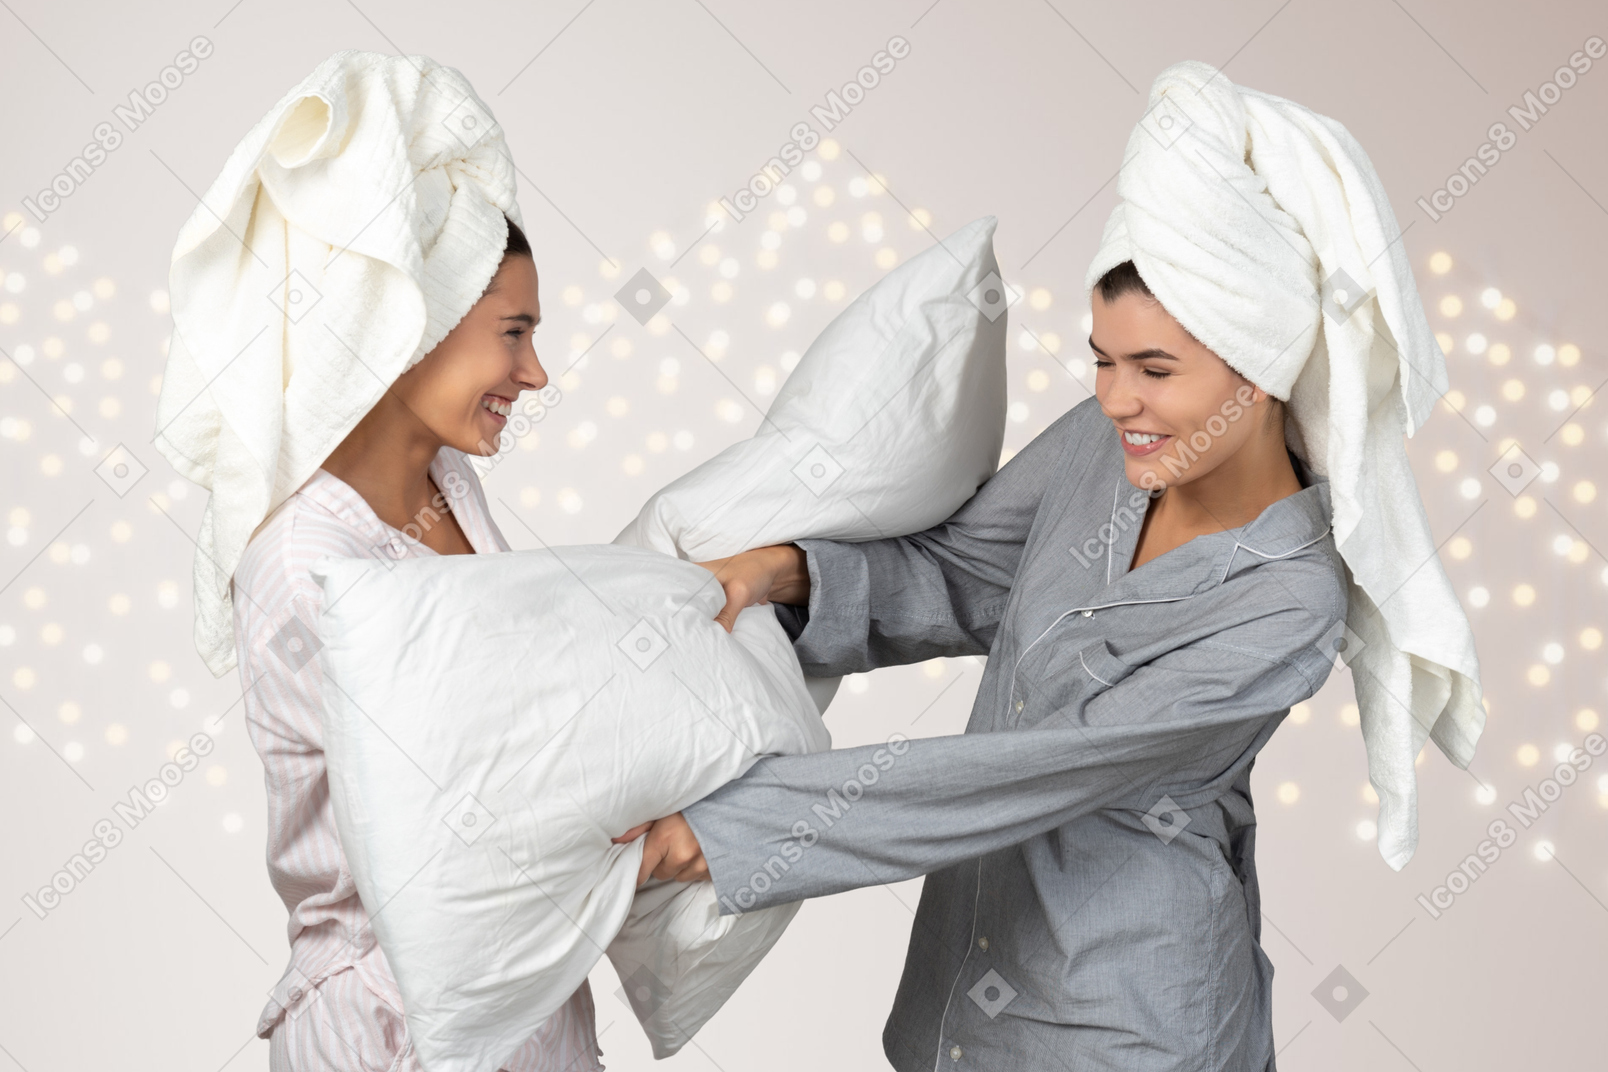 Two women having a pillow fight